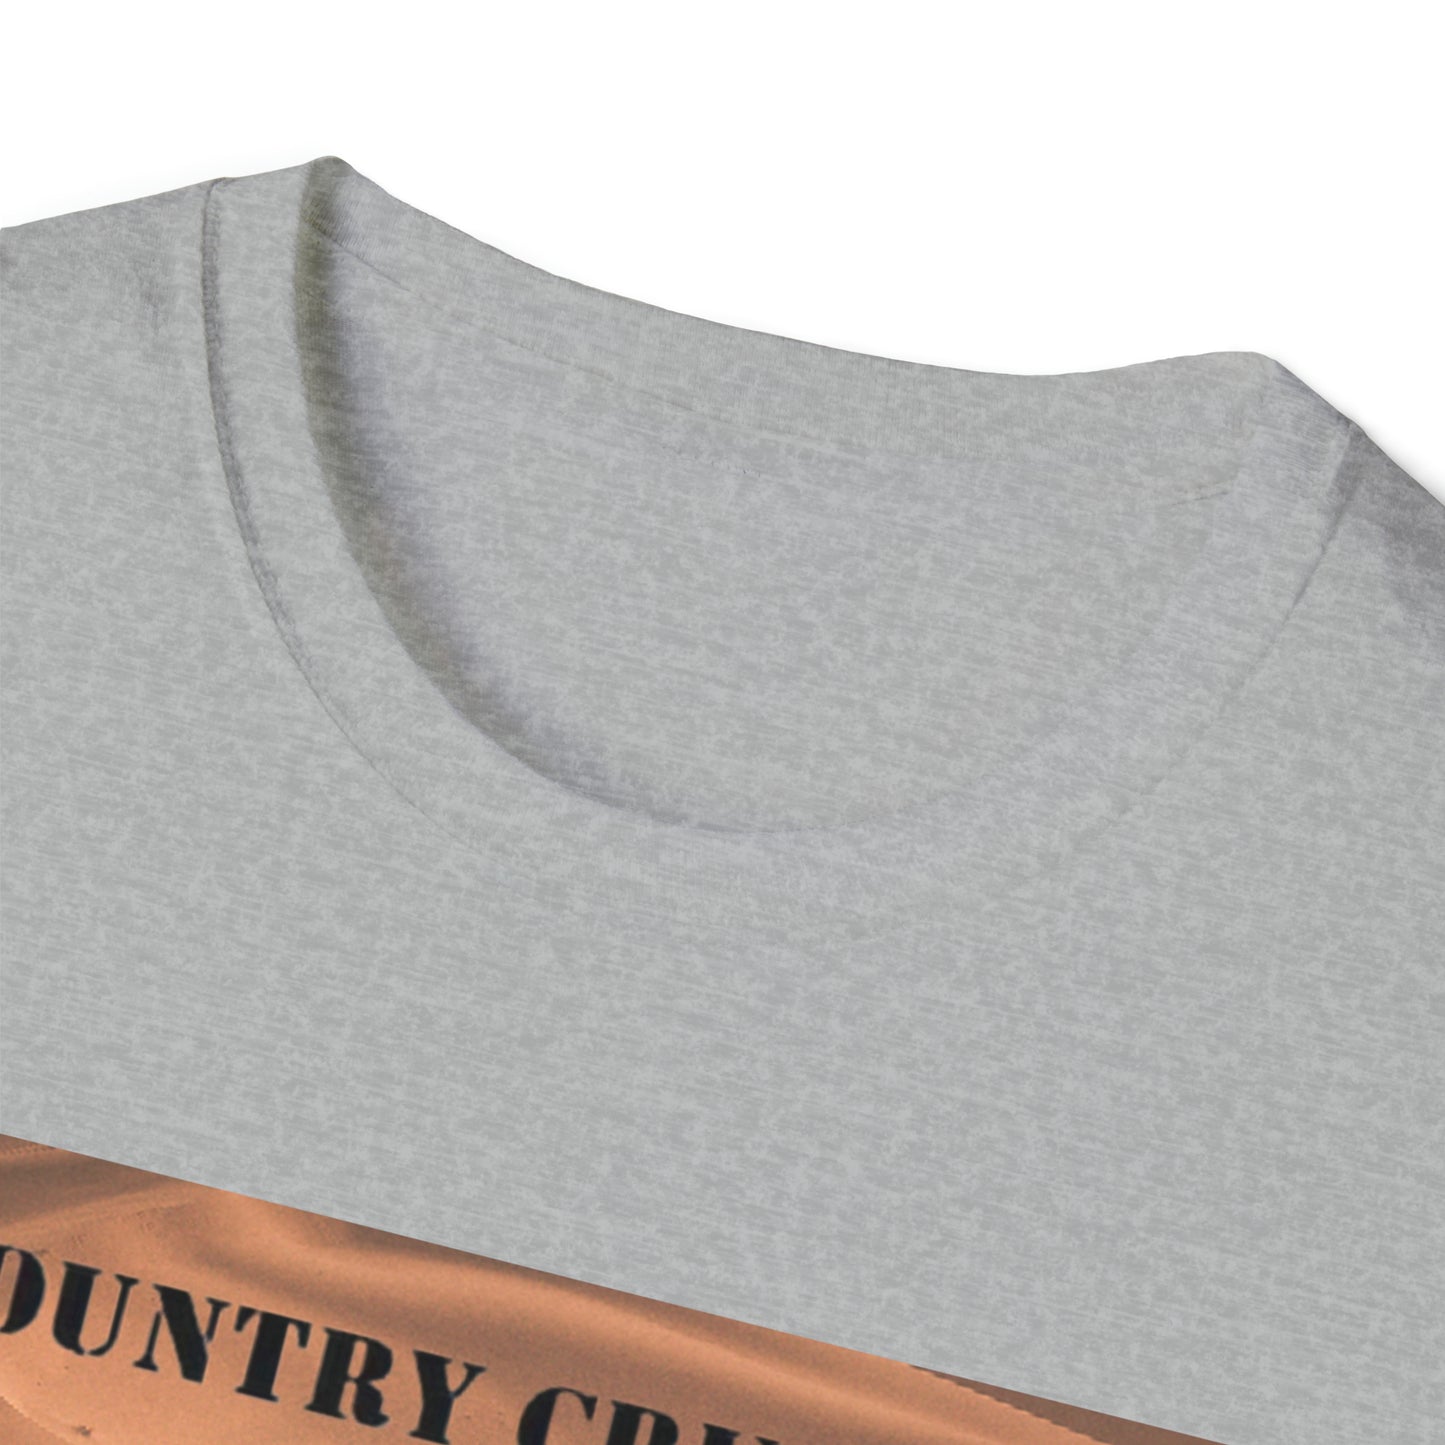 Country Cruzerz - Dunes Unisex Softstyle T-Shirt